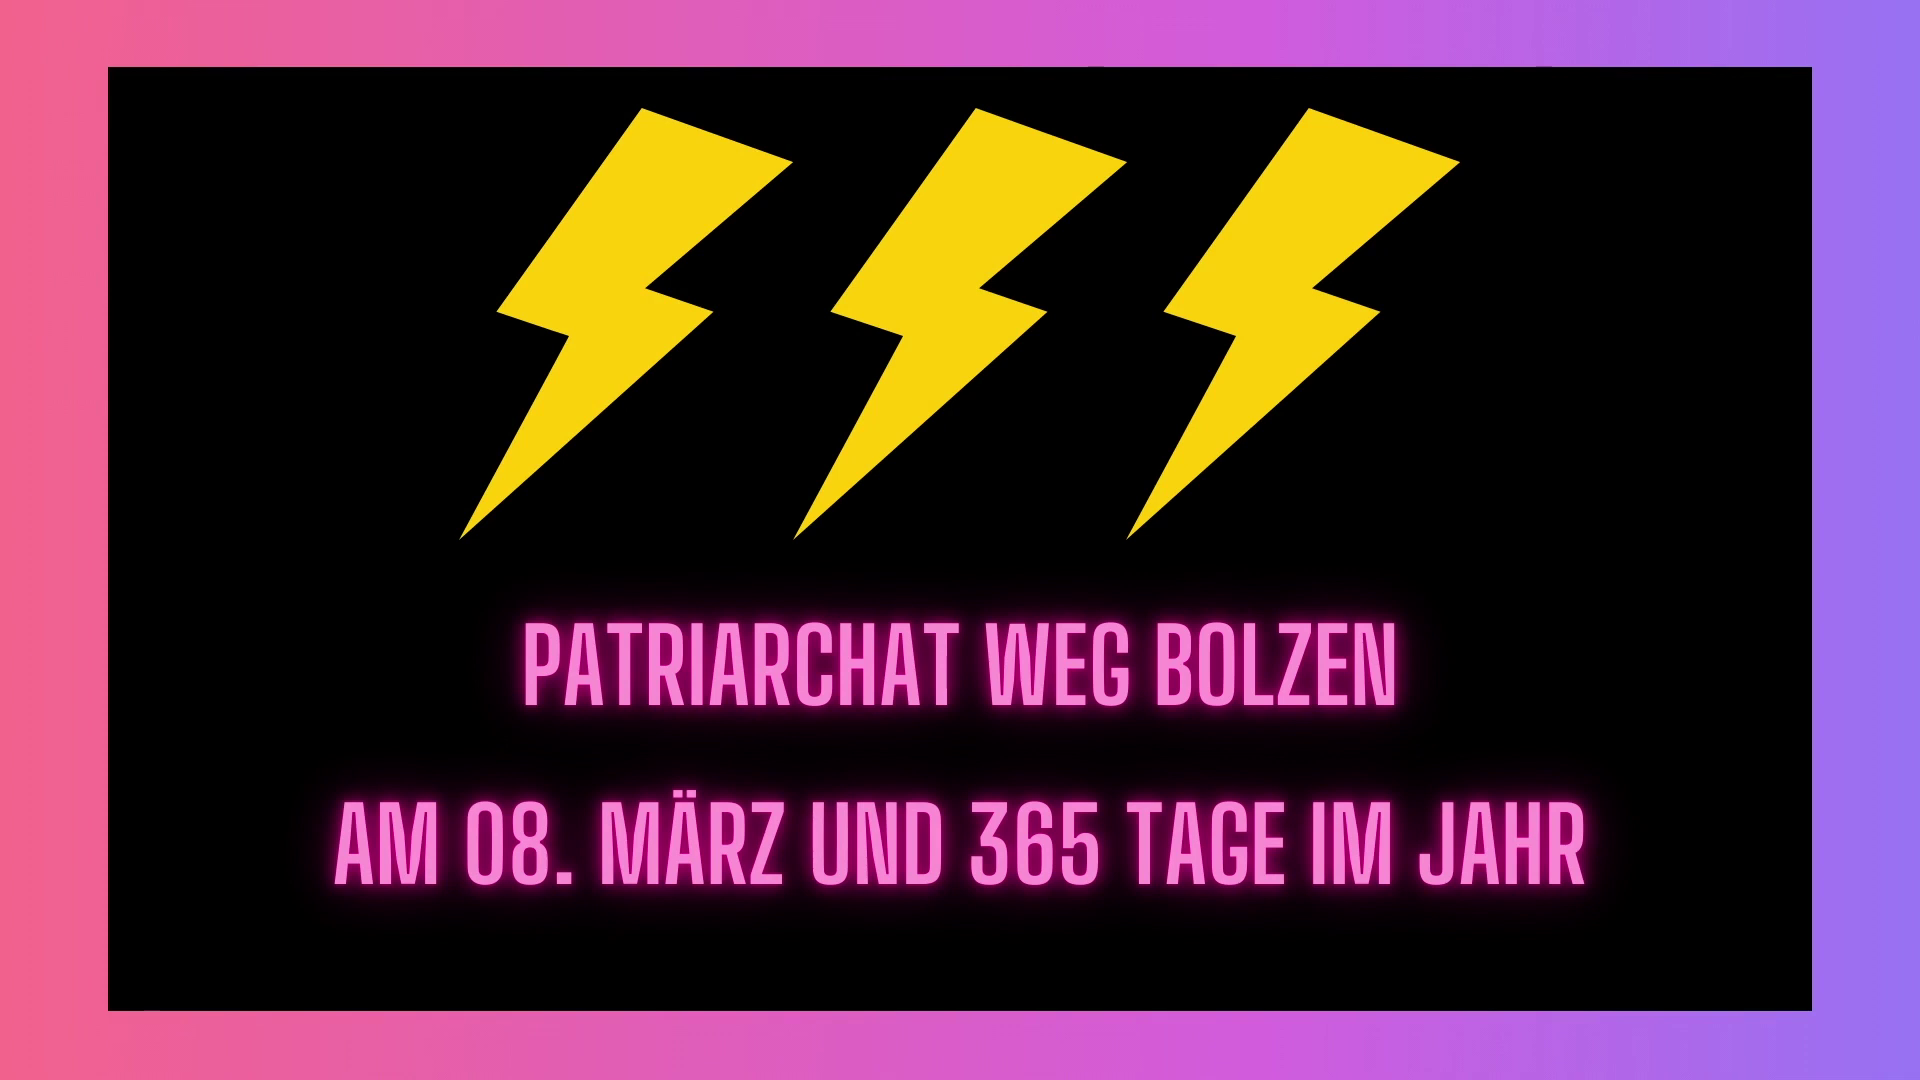 BOLZEN (feat. die Miezis): Patriarciao-Version